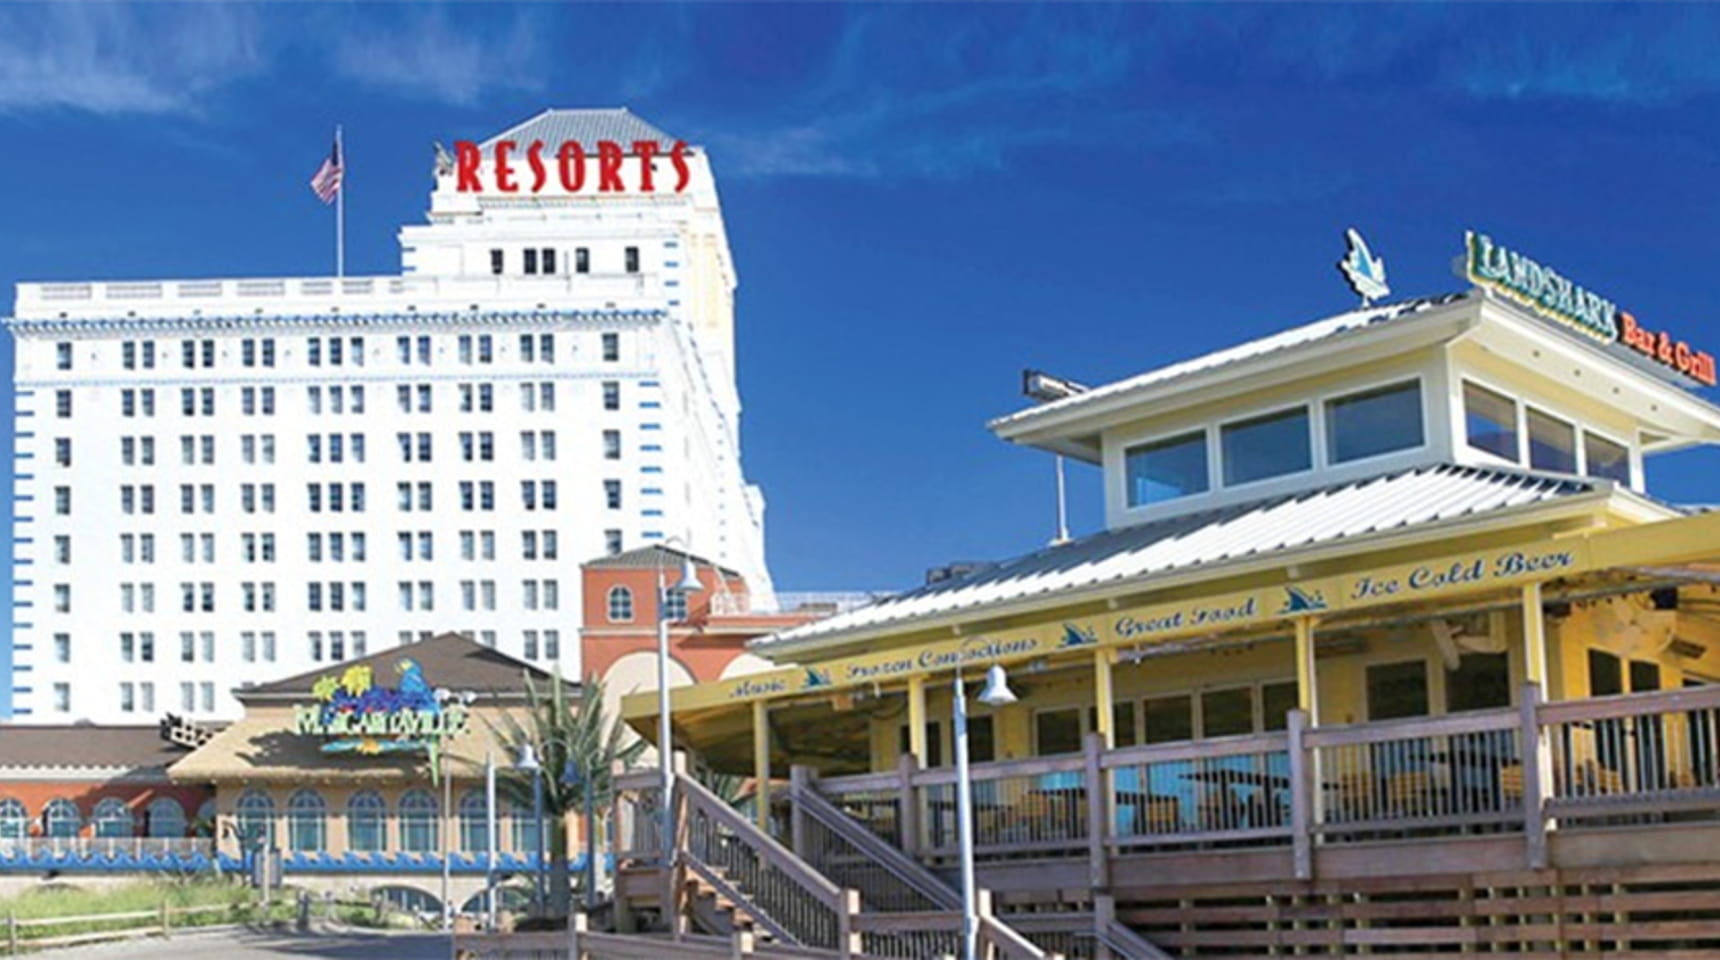 atlantic city resorts casino hotel